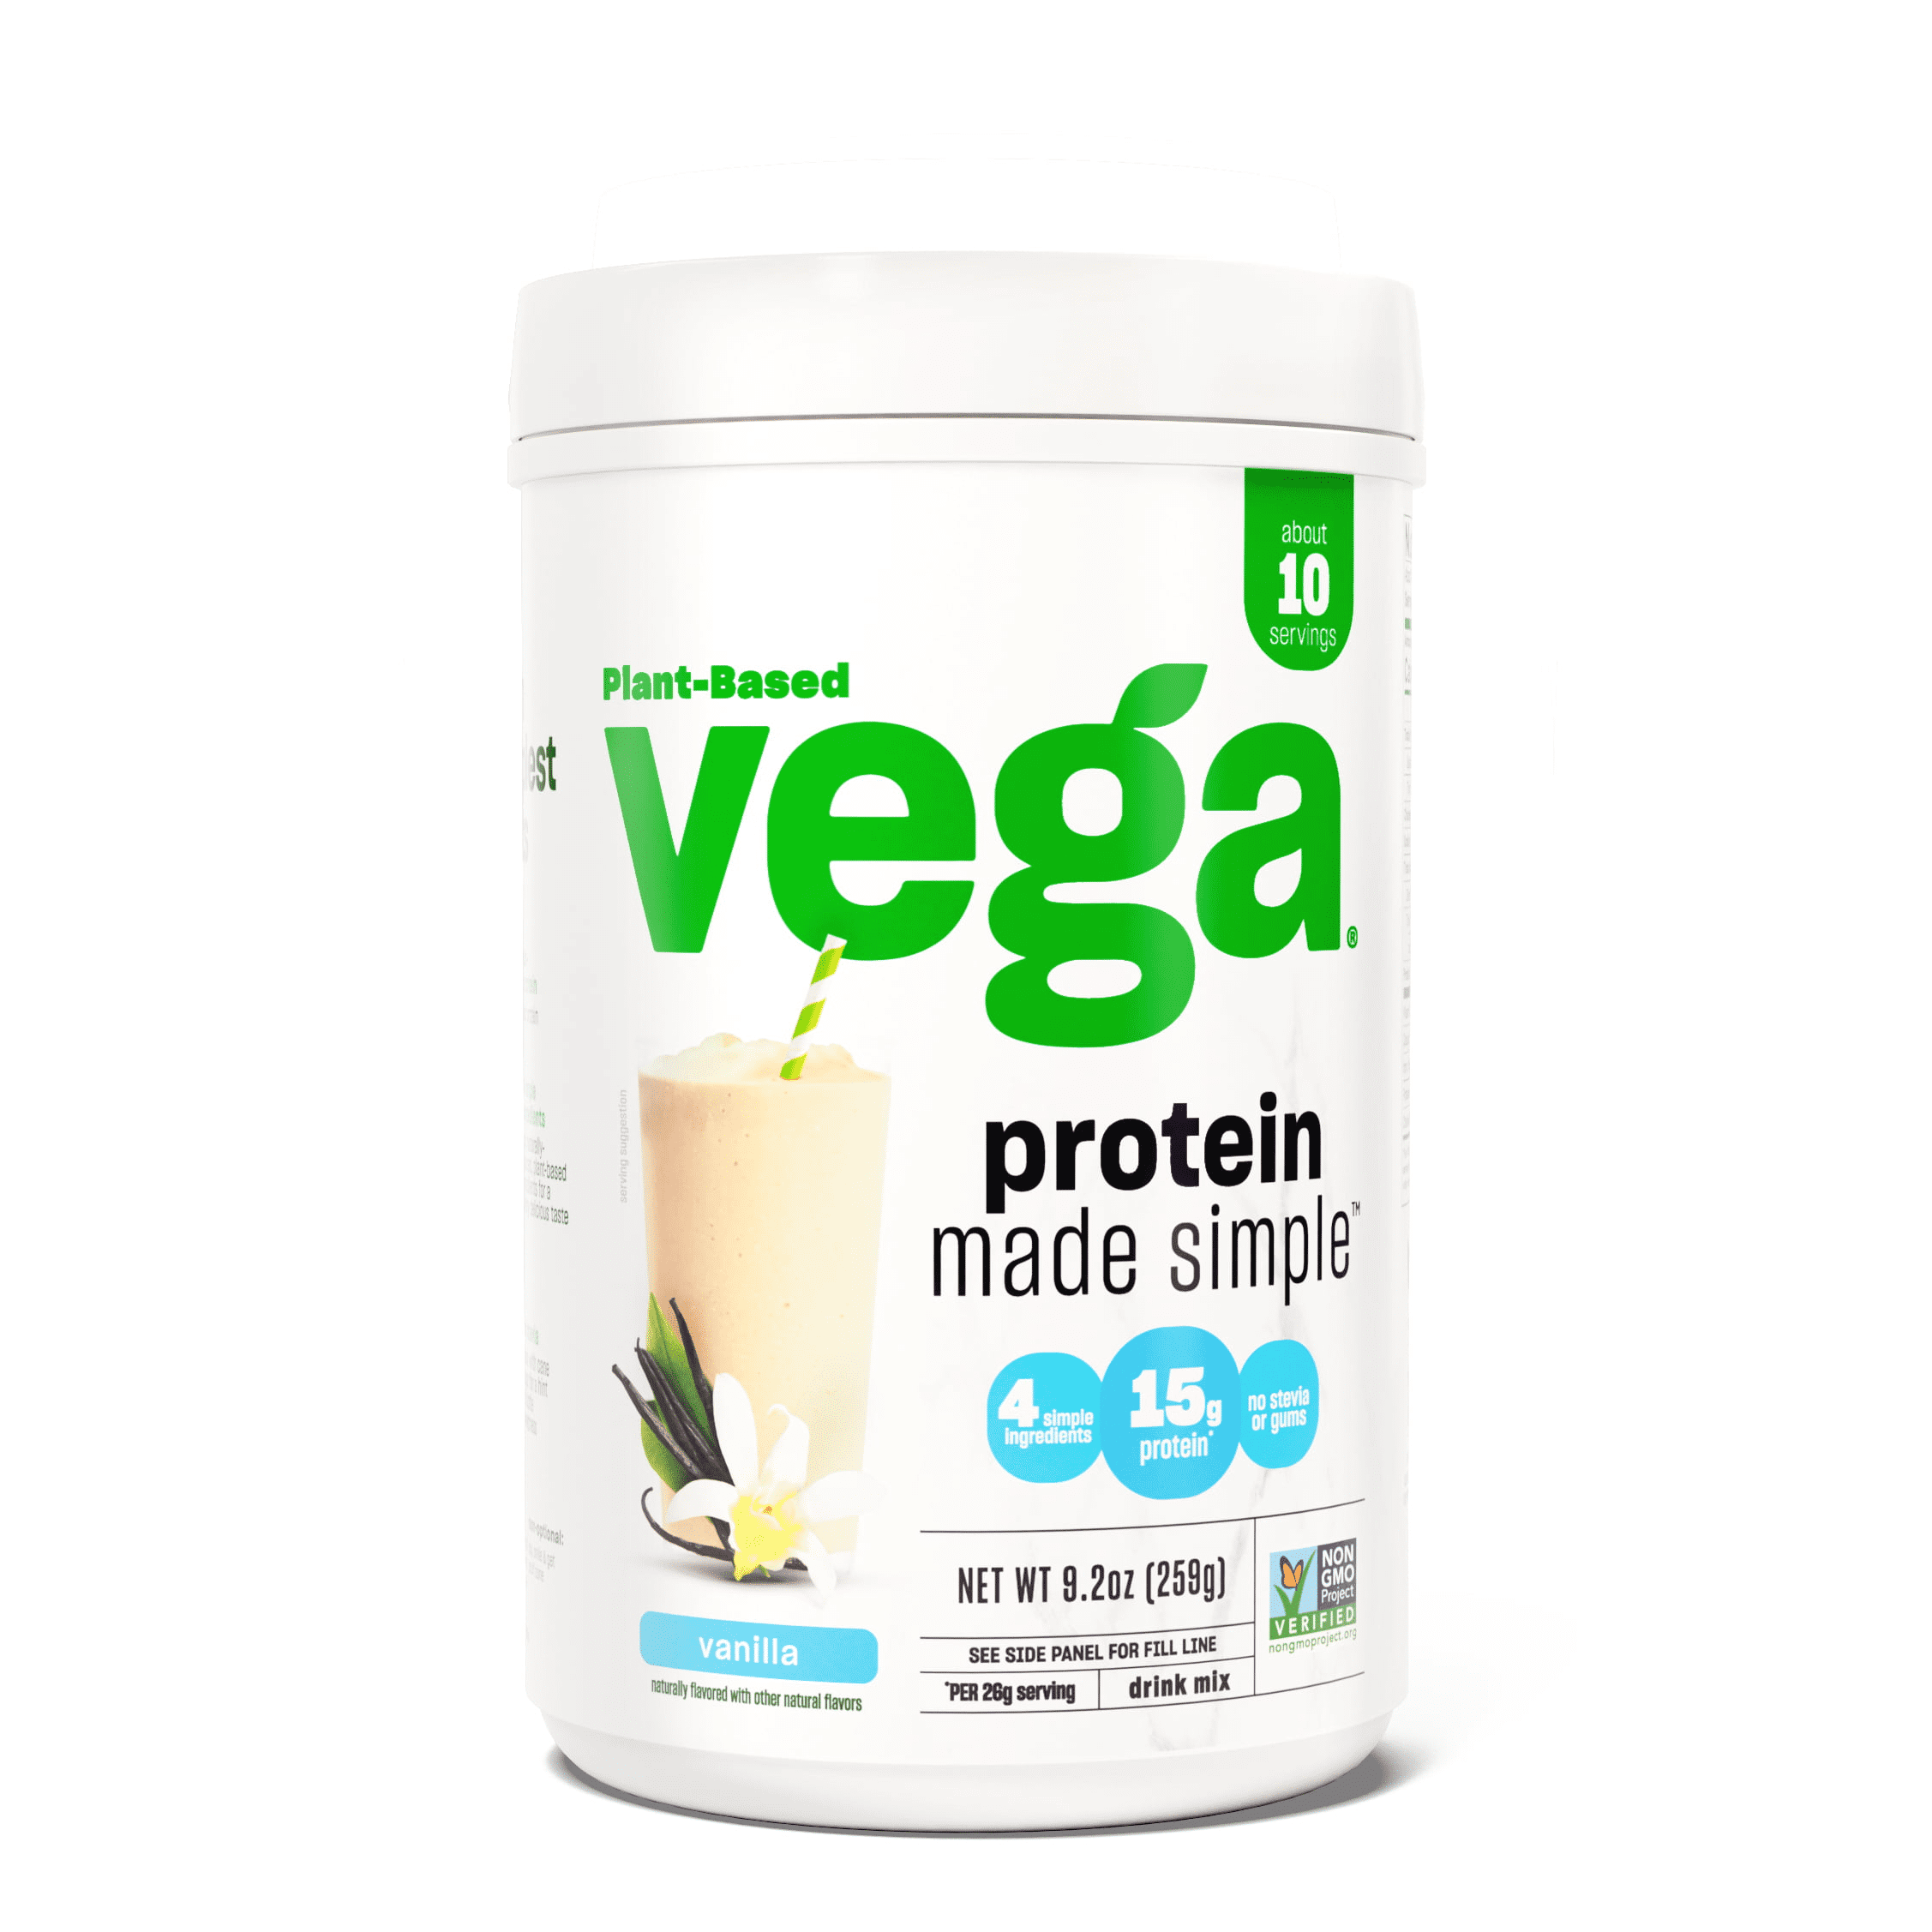 Vega Protein Made Simple Vegan Protein Powder, Vanilla (9.2oz, 10 Servings) - image 1 of 8